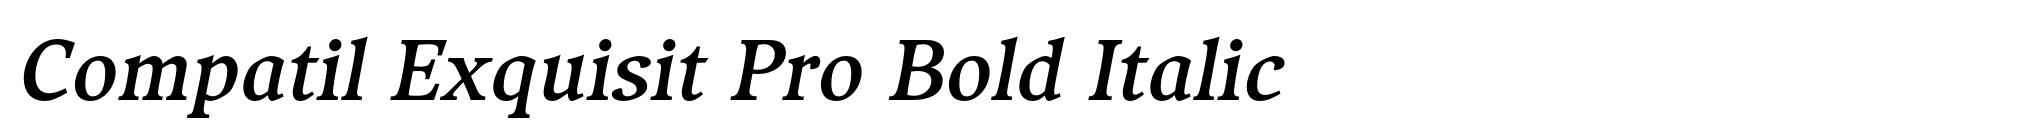 Compatil Exquisit Pro Bold Italic image